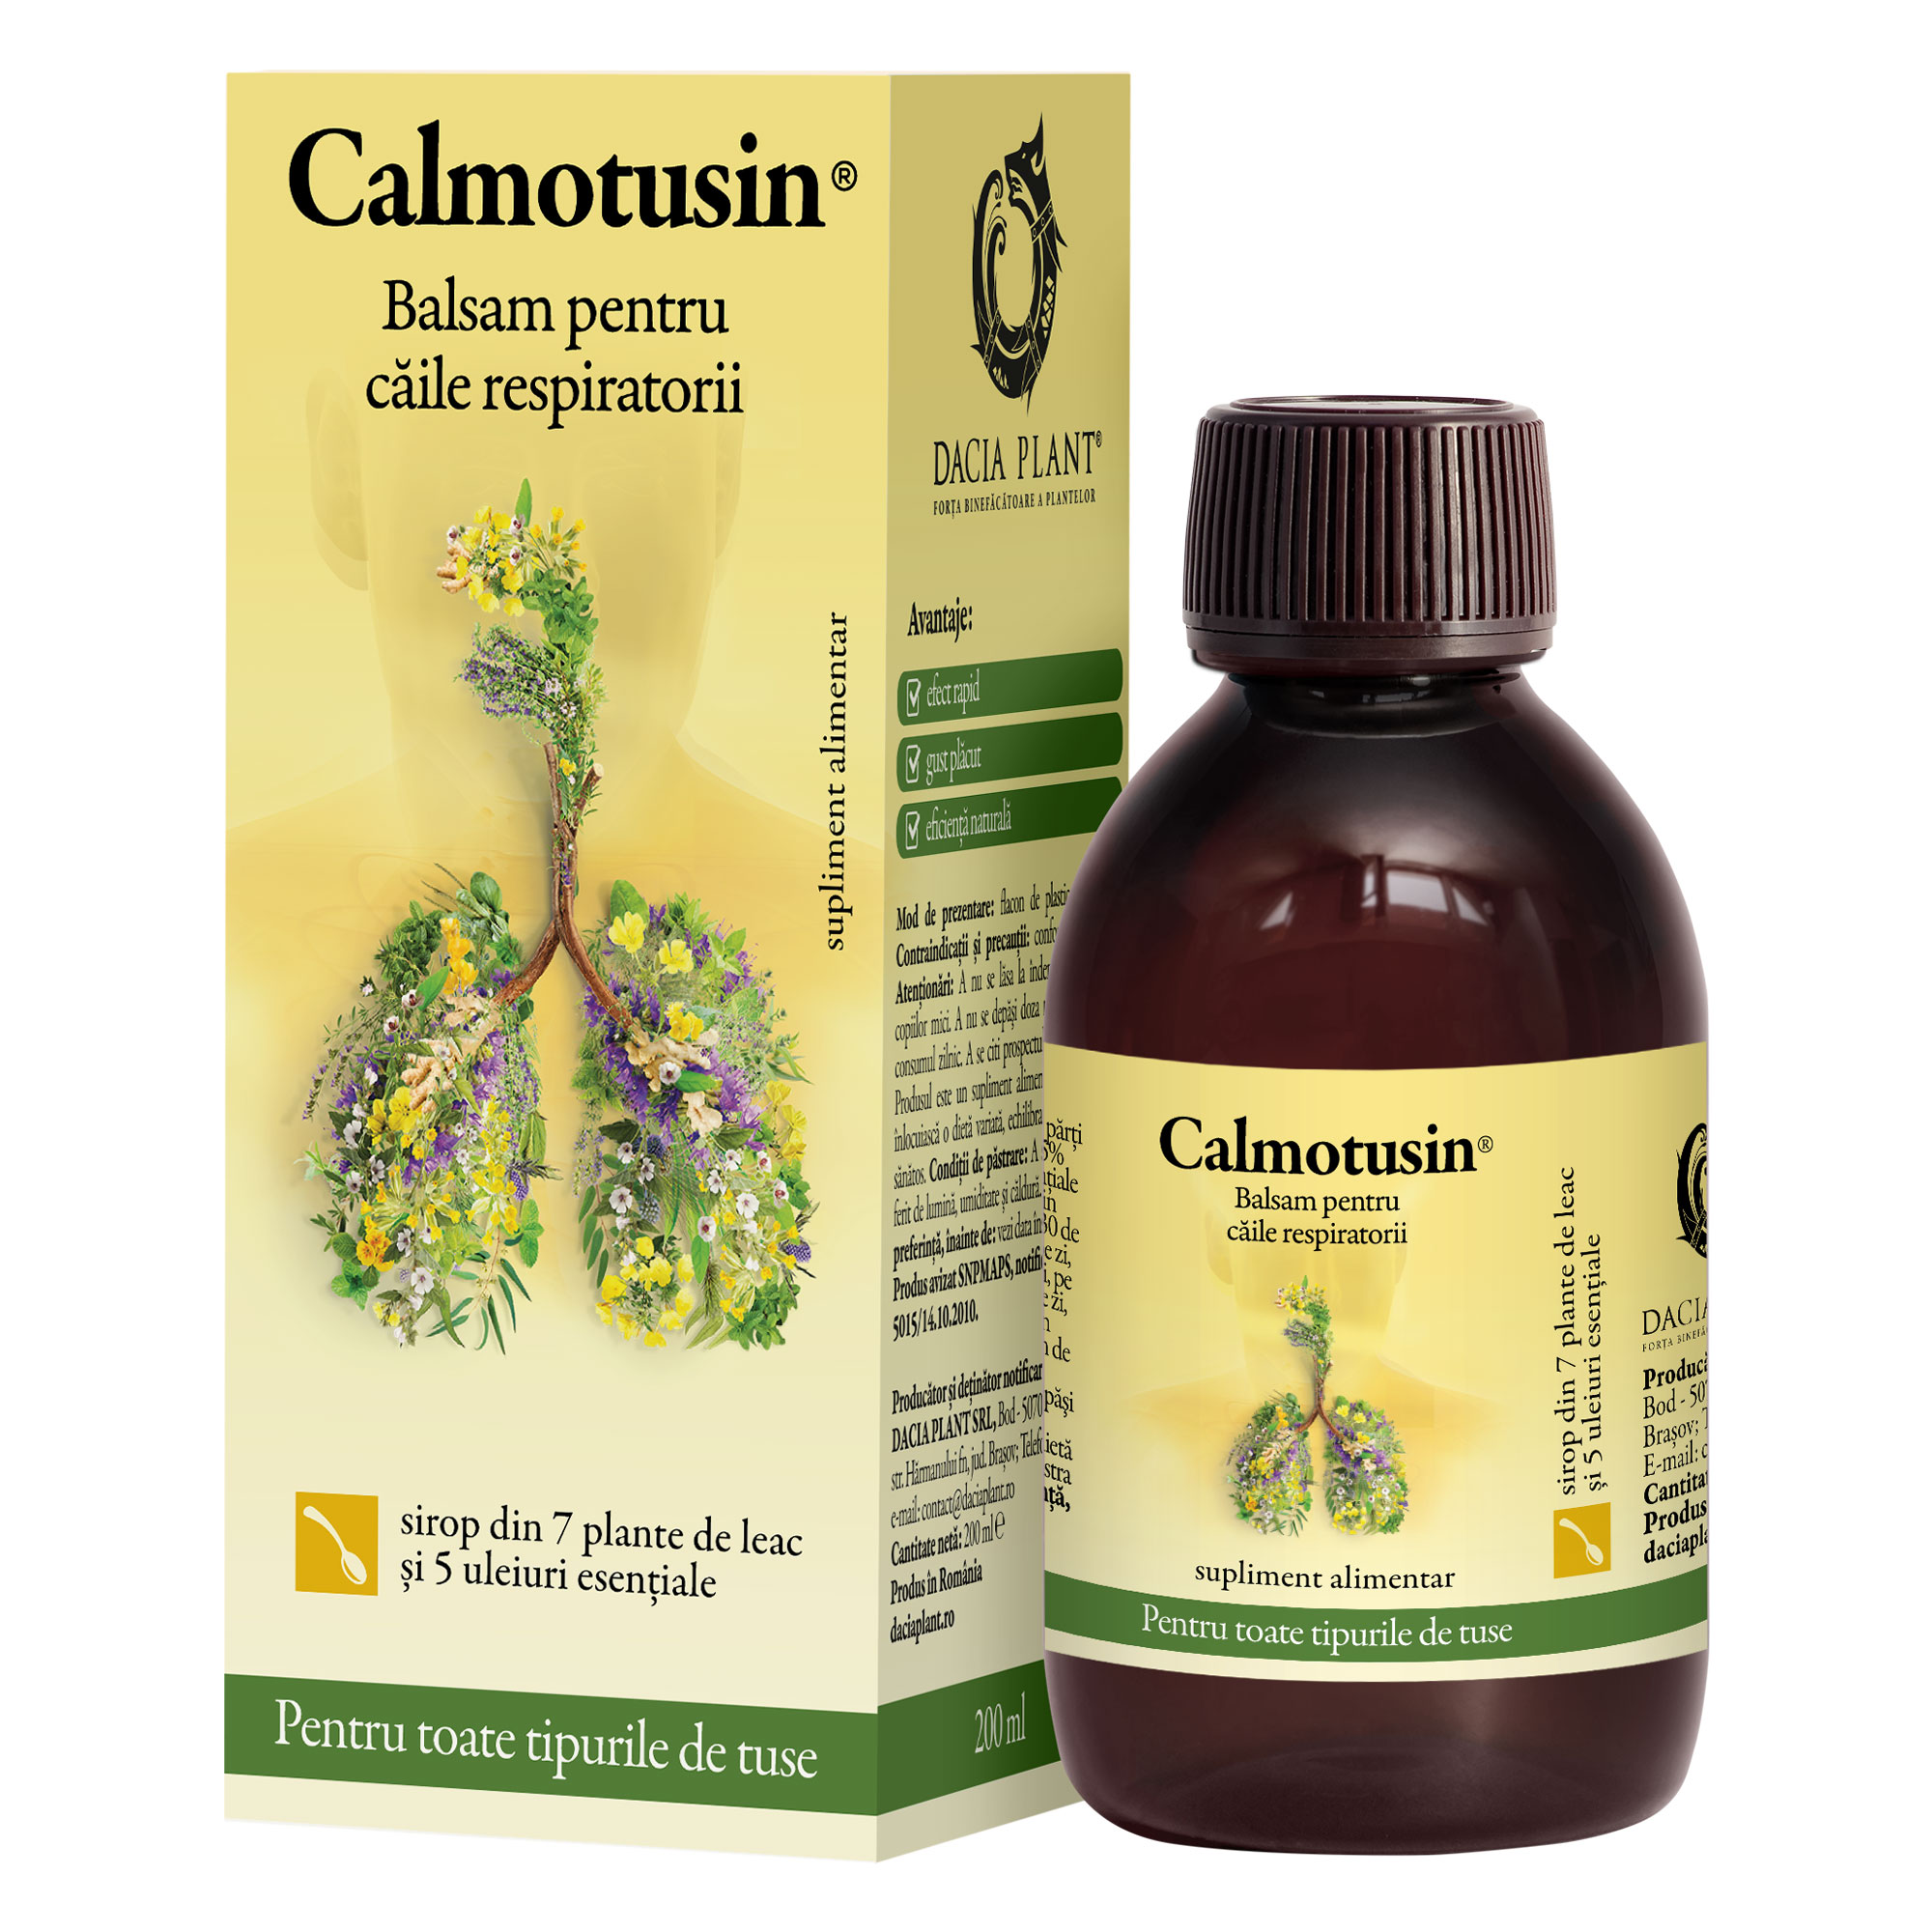 Calmotusin sirop cu miere de salcam (Balsam pt caile respiratorii) Dacia Plant – 100 ml